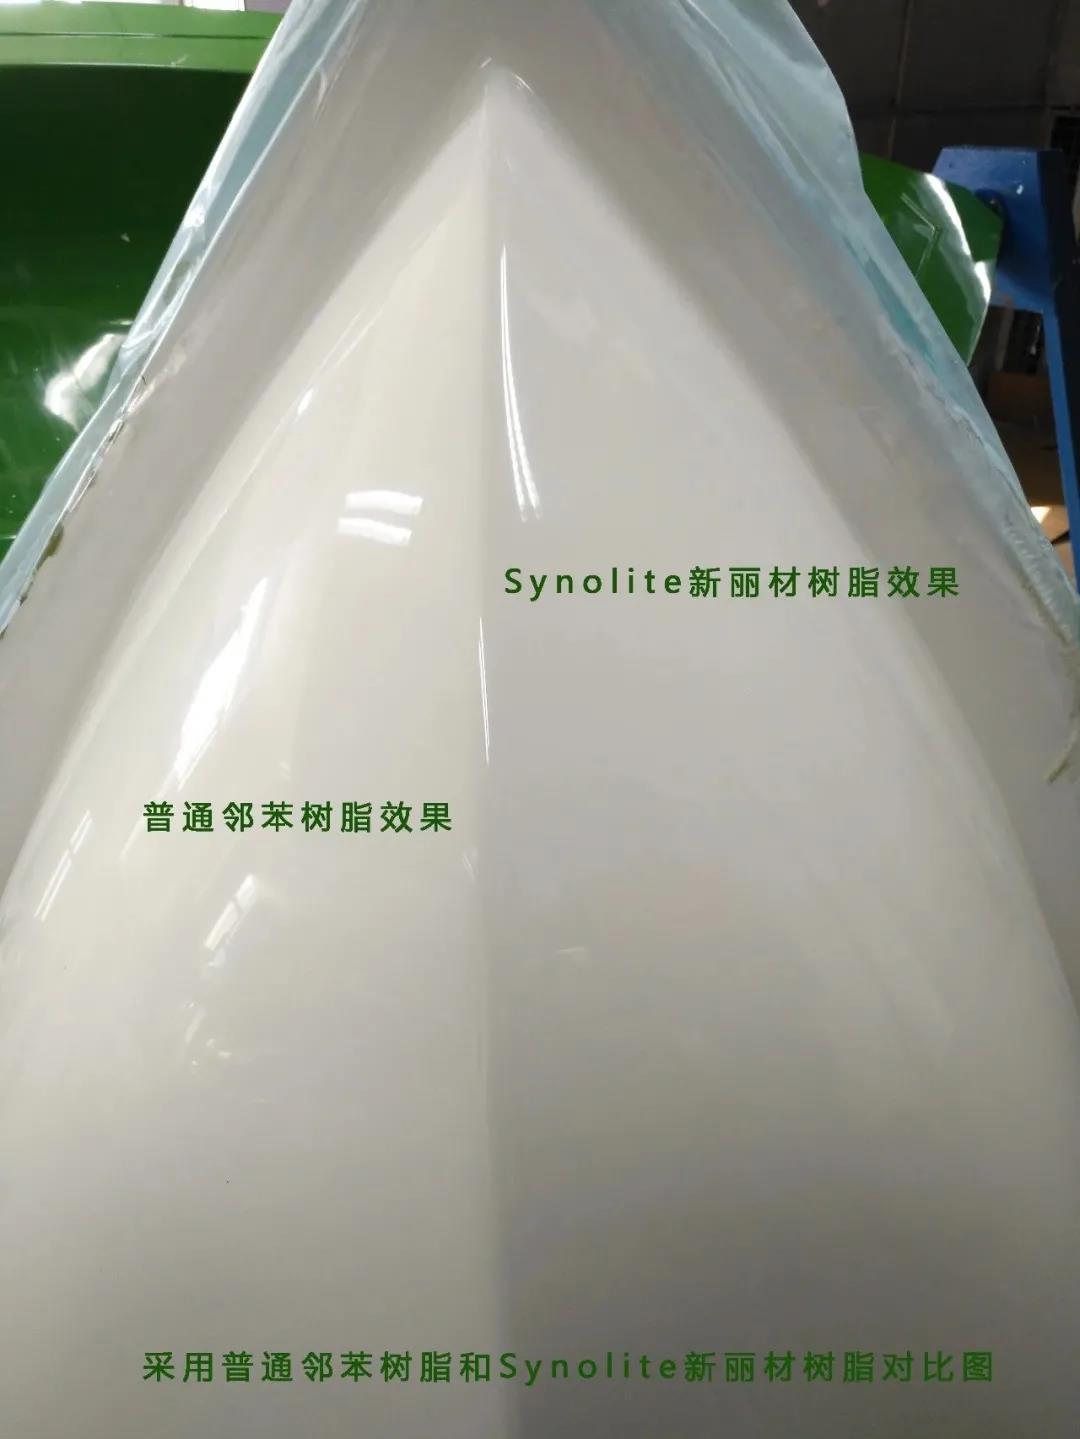 Synolite新丽材树脂与普通树脂的使用对比